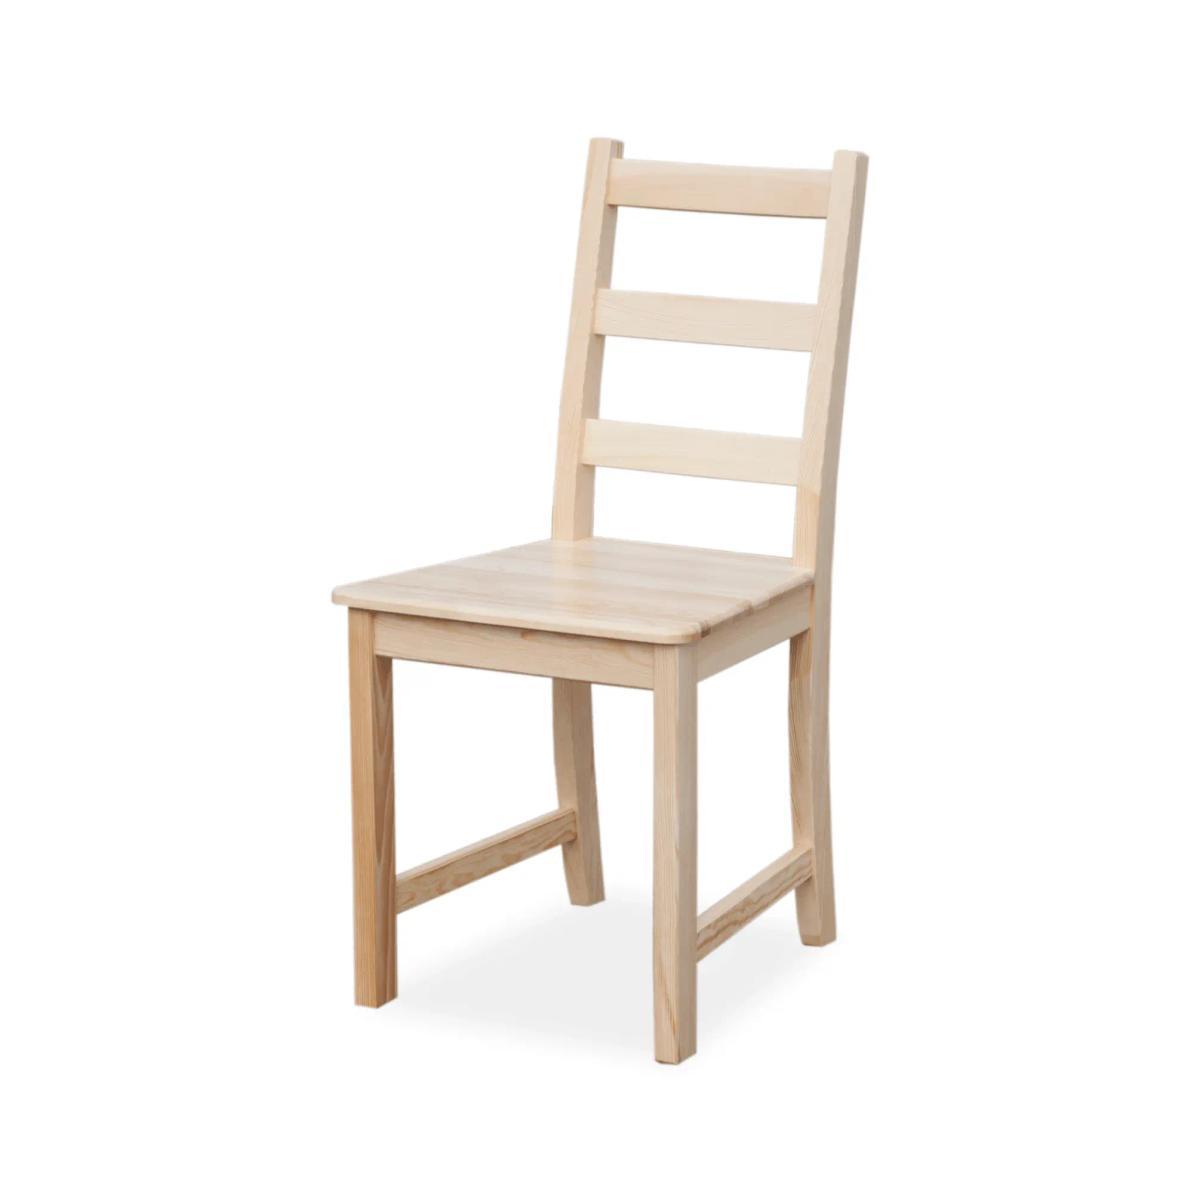 Krzesło drewniane SWC-120 49x87x62 cm do kuchni jadalni sosna naturalna  0 Full Screen